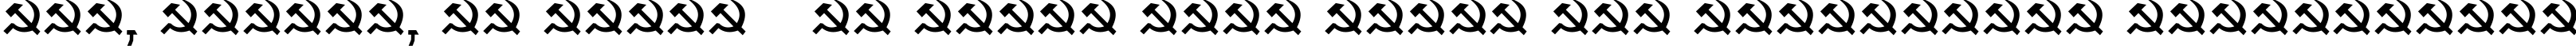 Пример написания шрифтом Castro текста на украинском